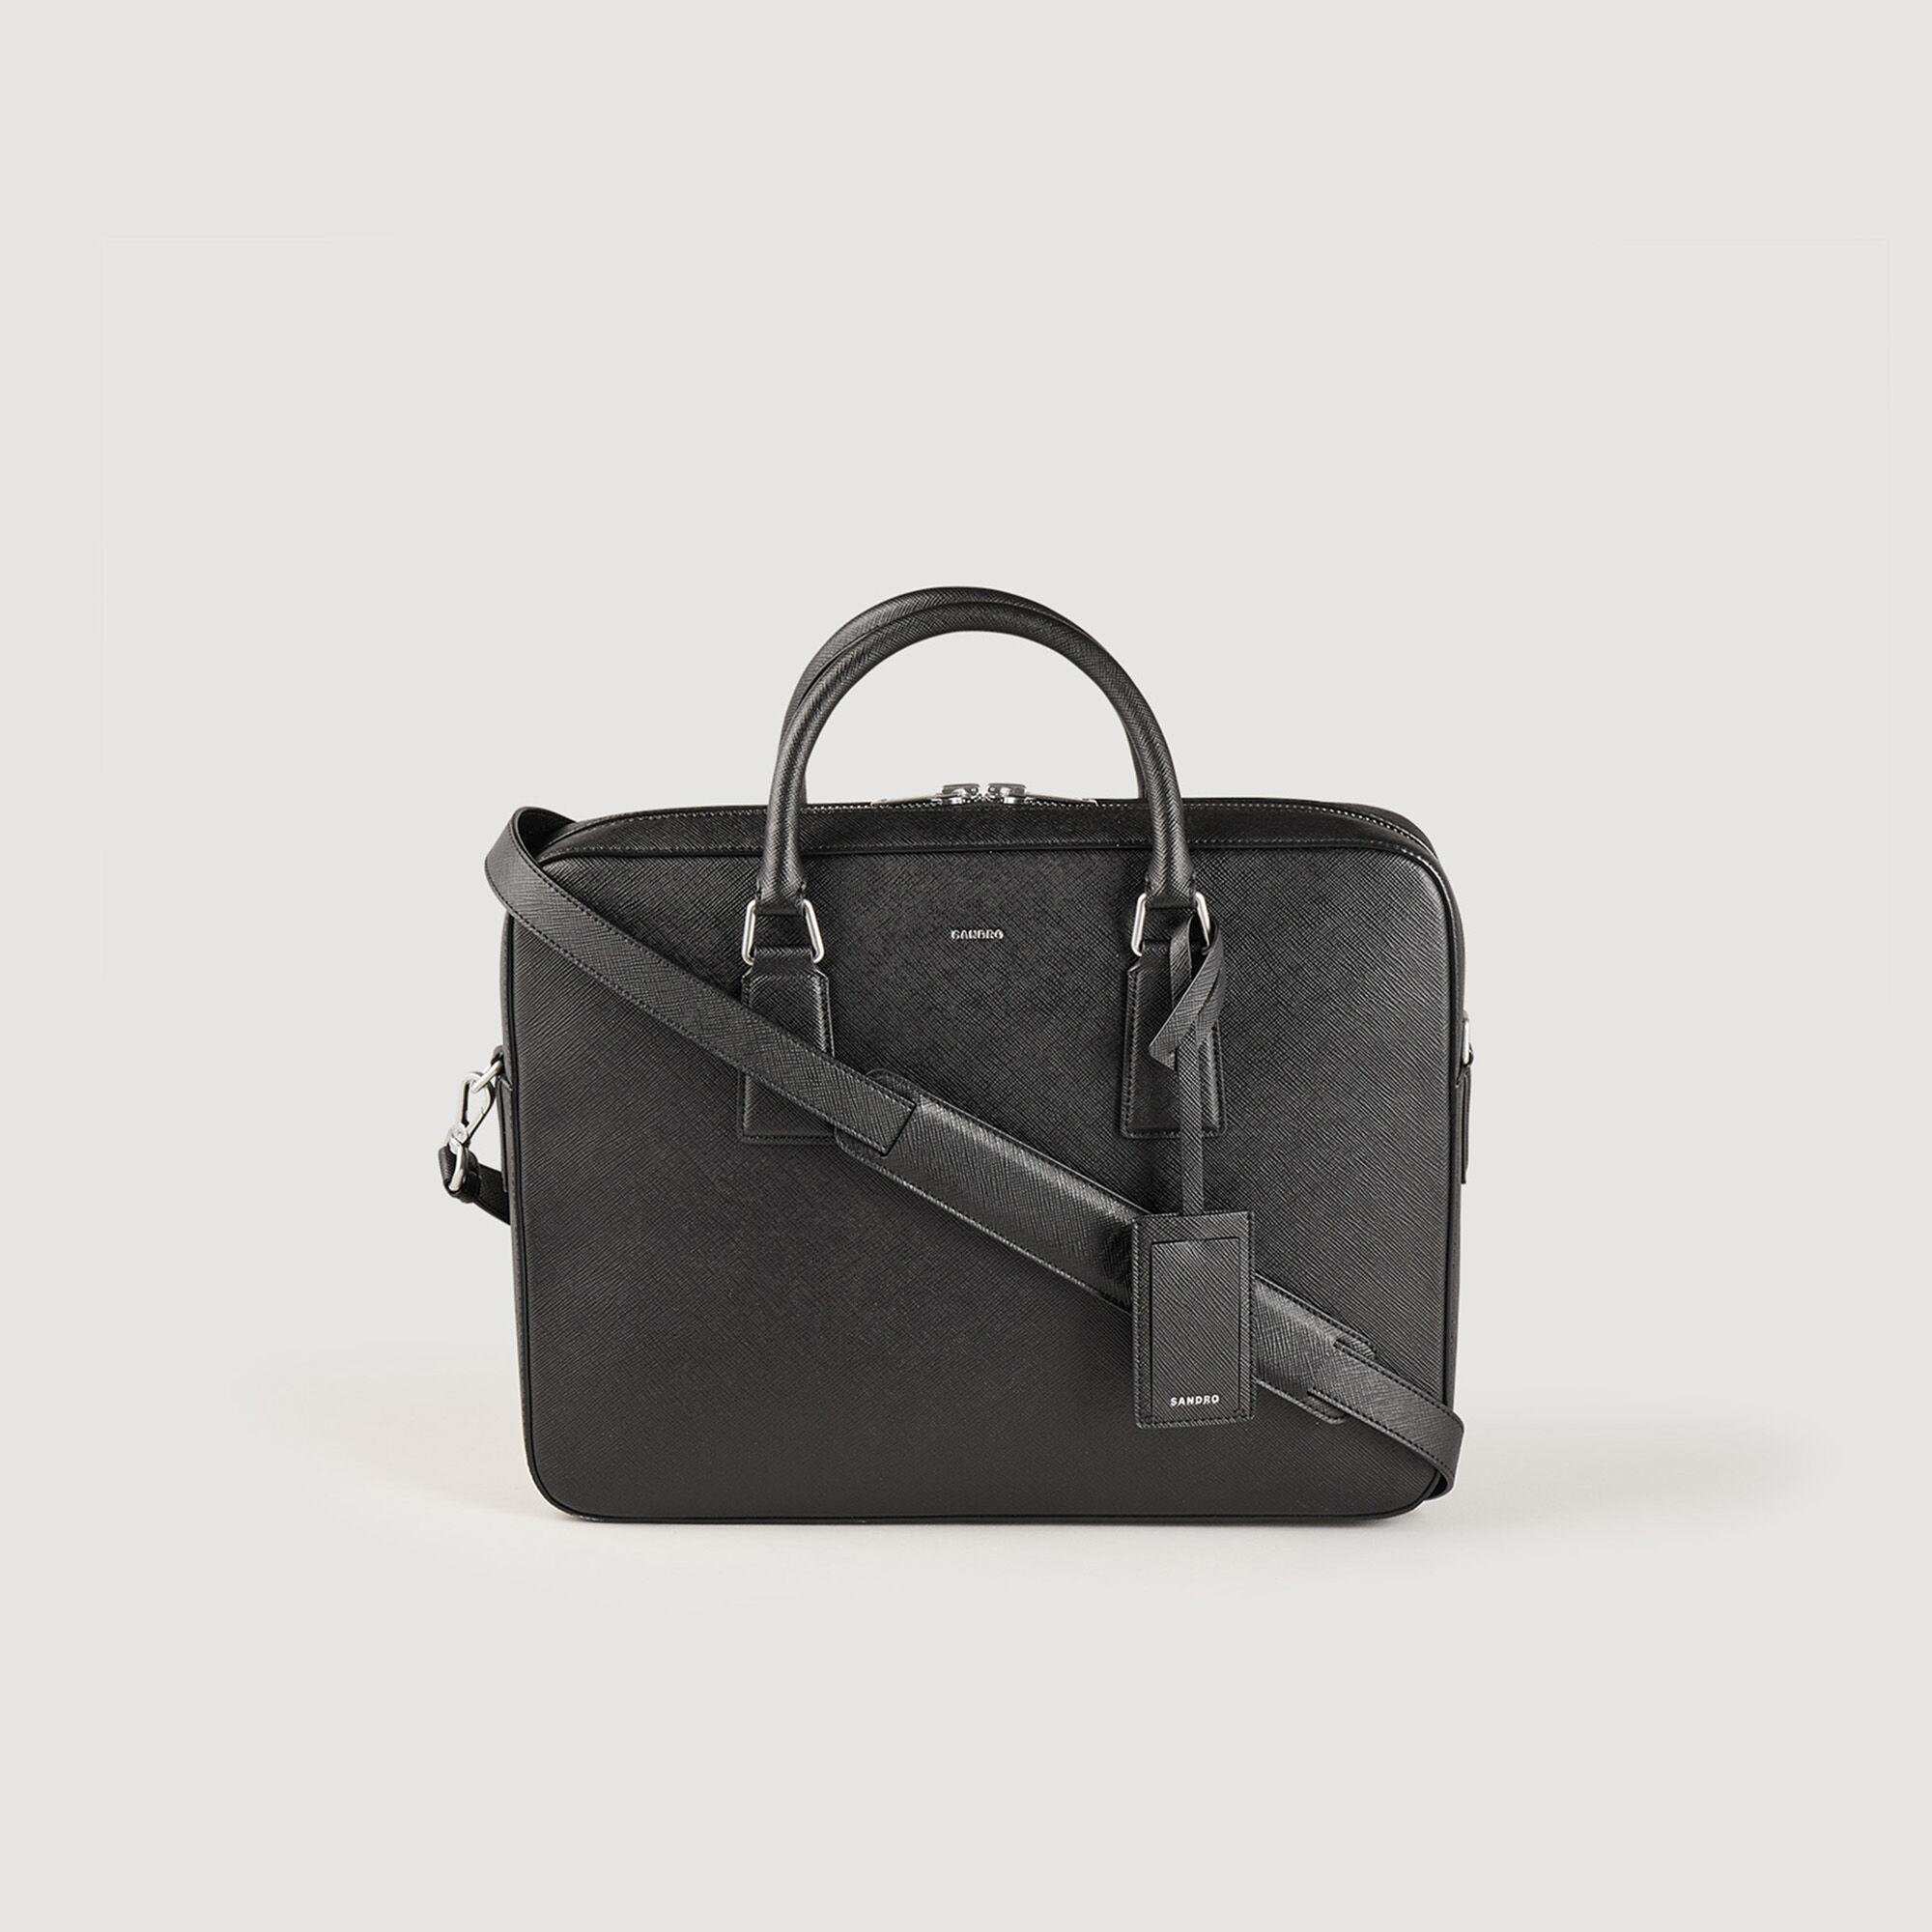 Saffiano leather briefcase by SANDRO PARIS